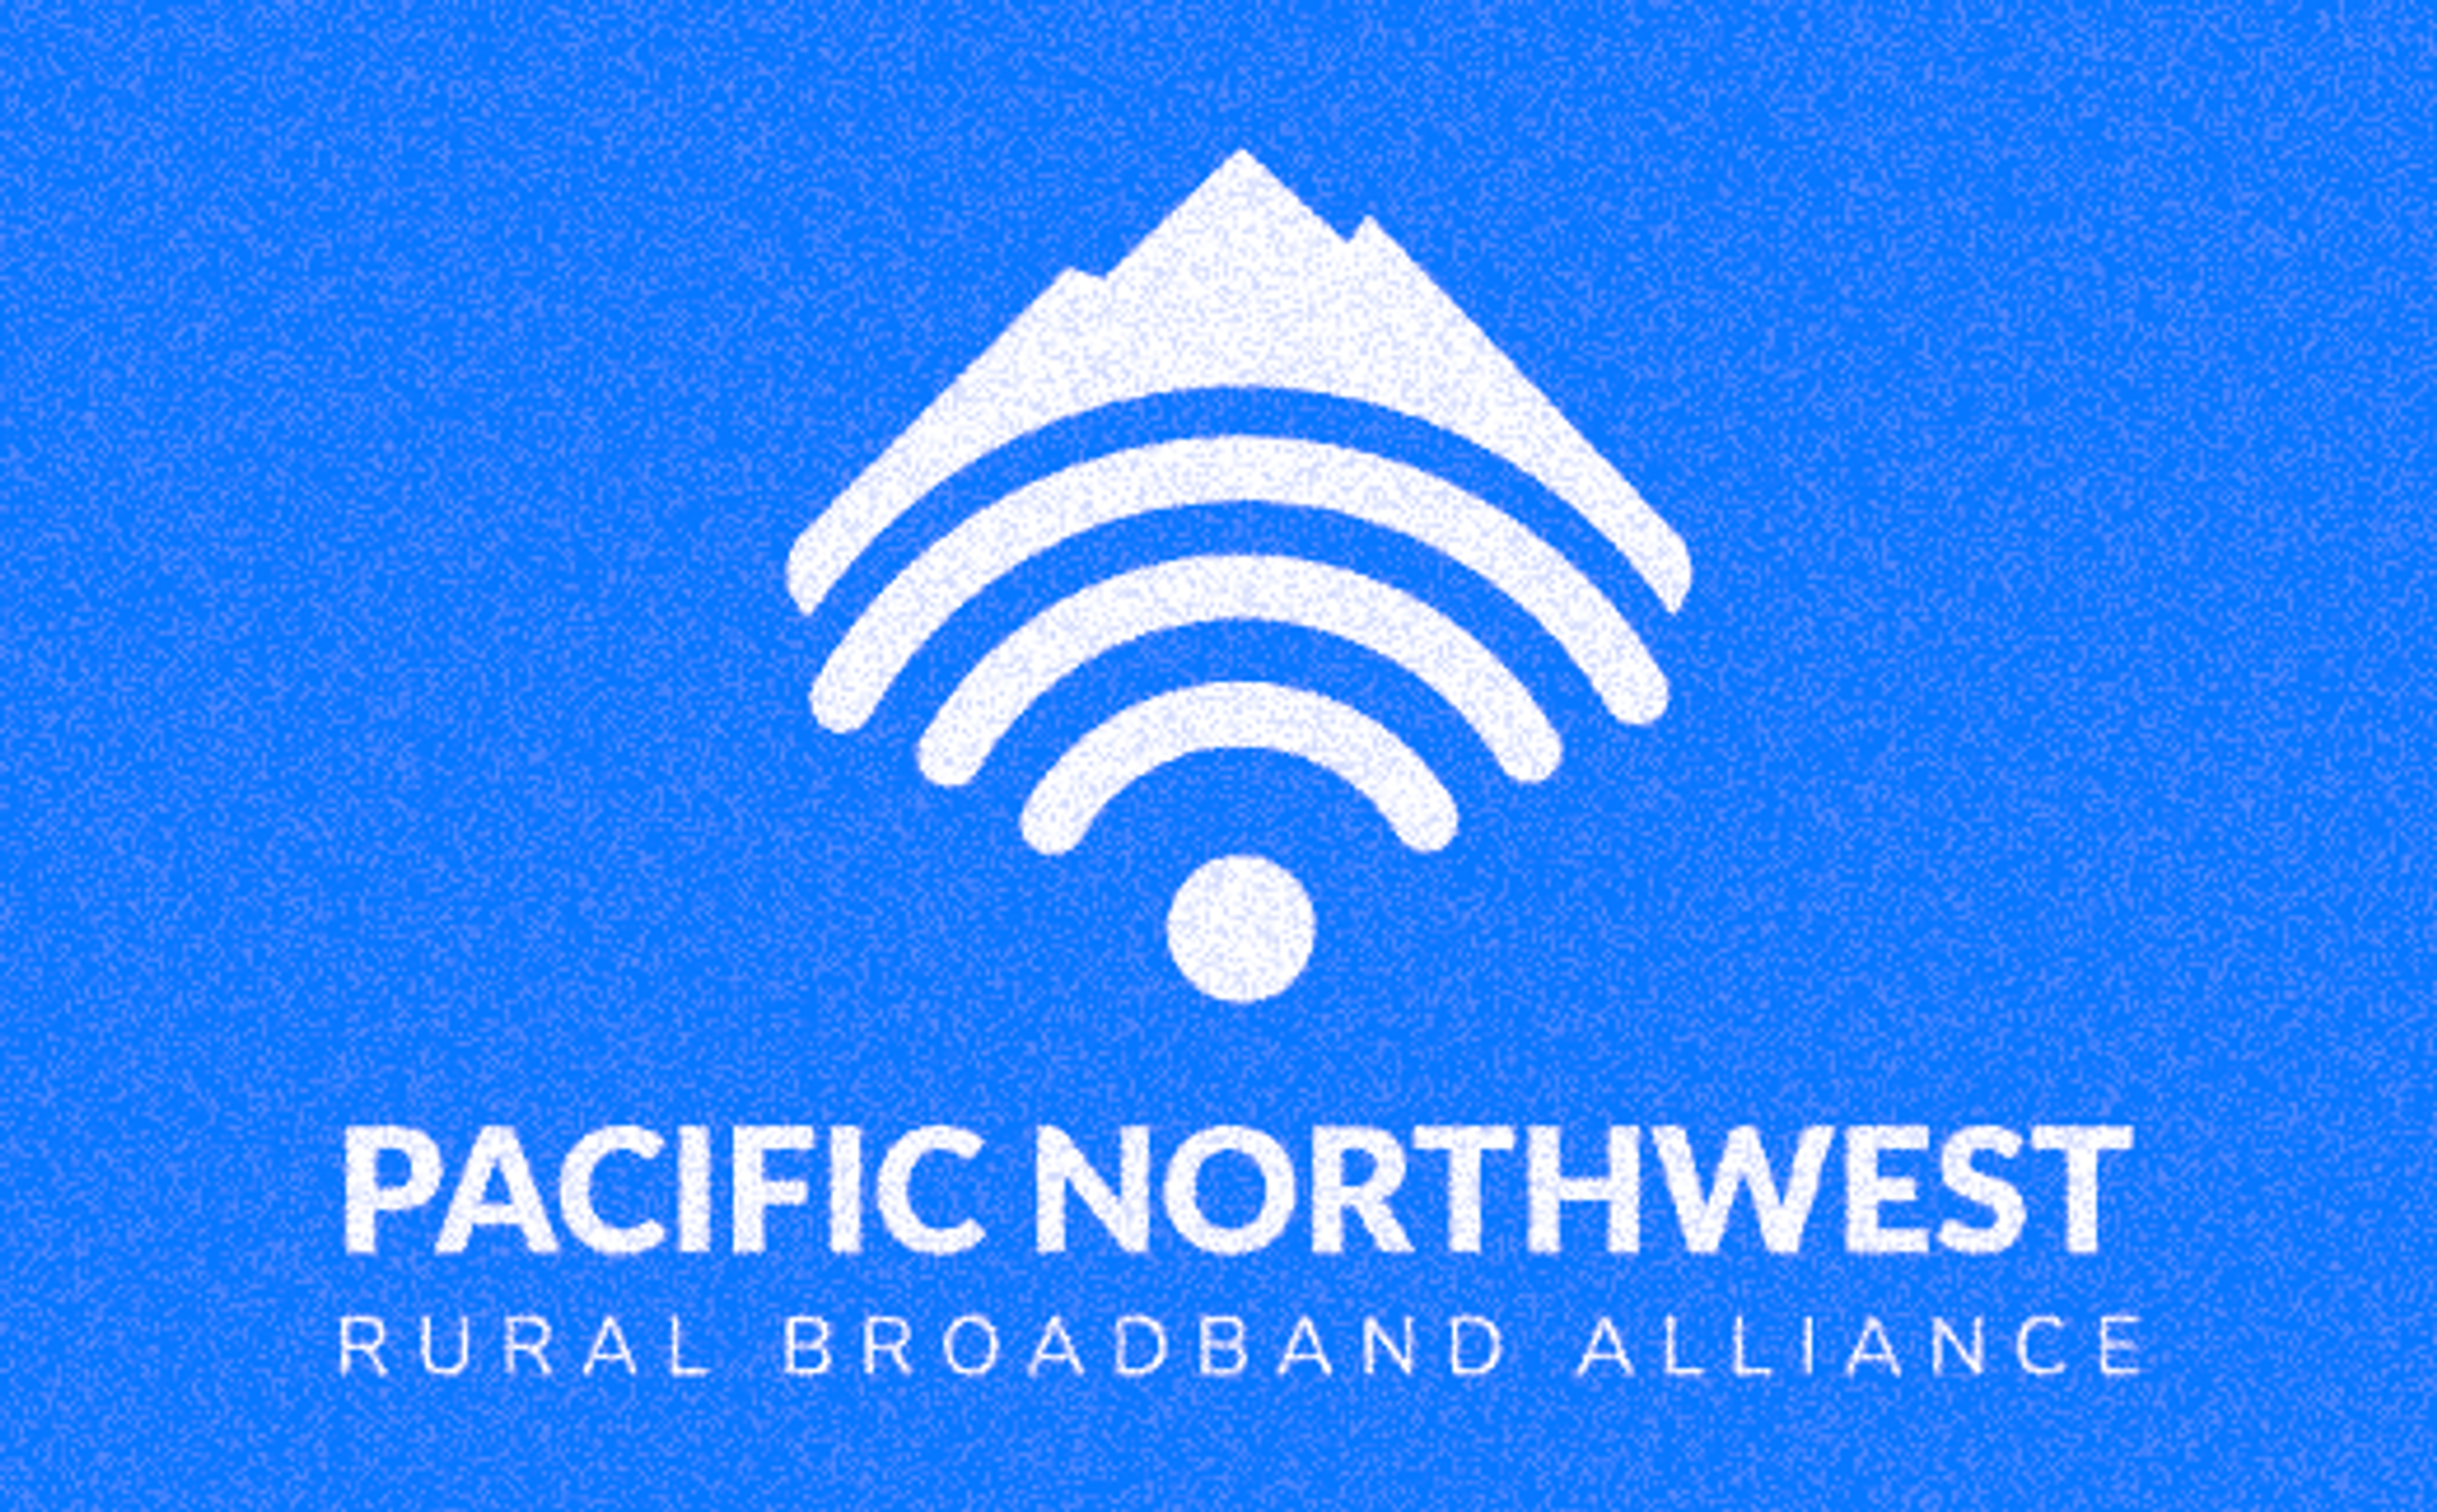 Pacific Northwest Rural Broadband Alliance logo